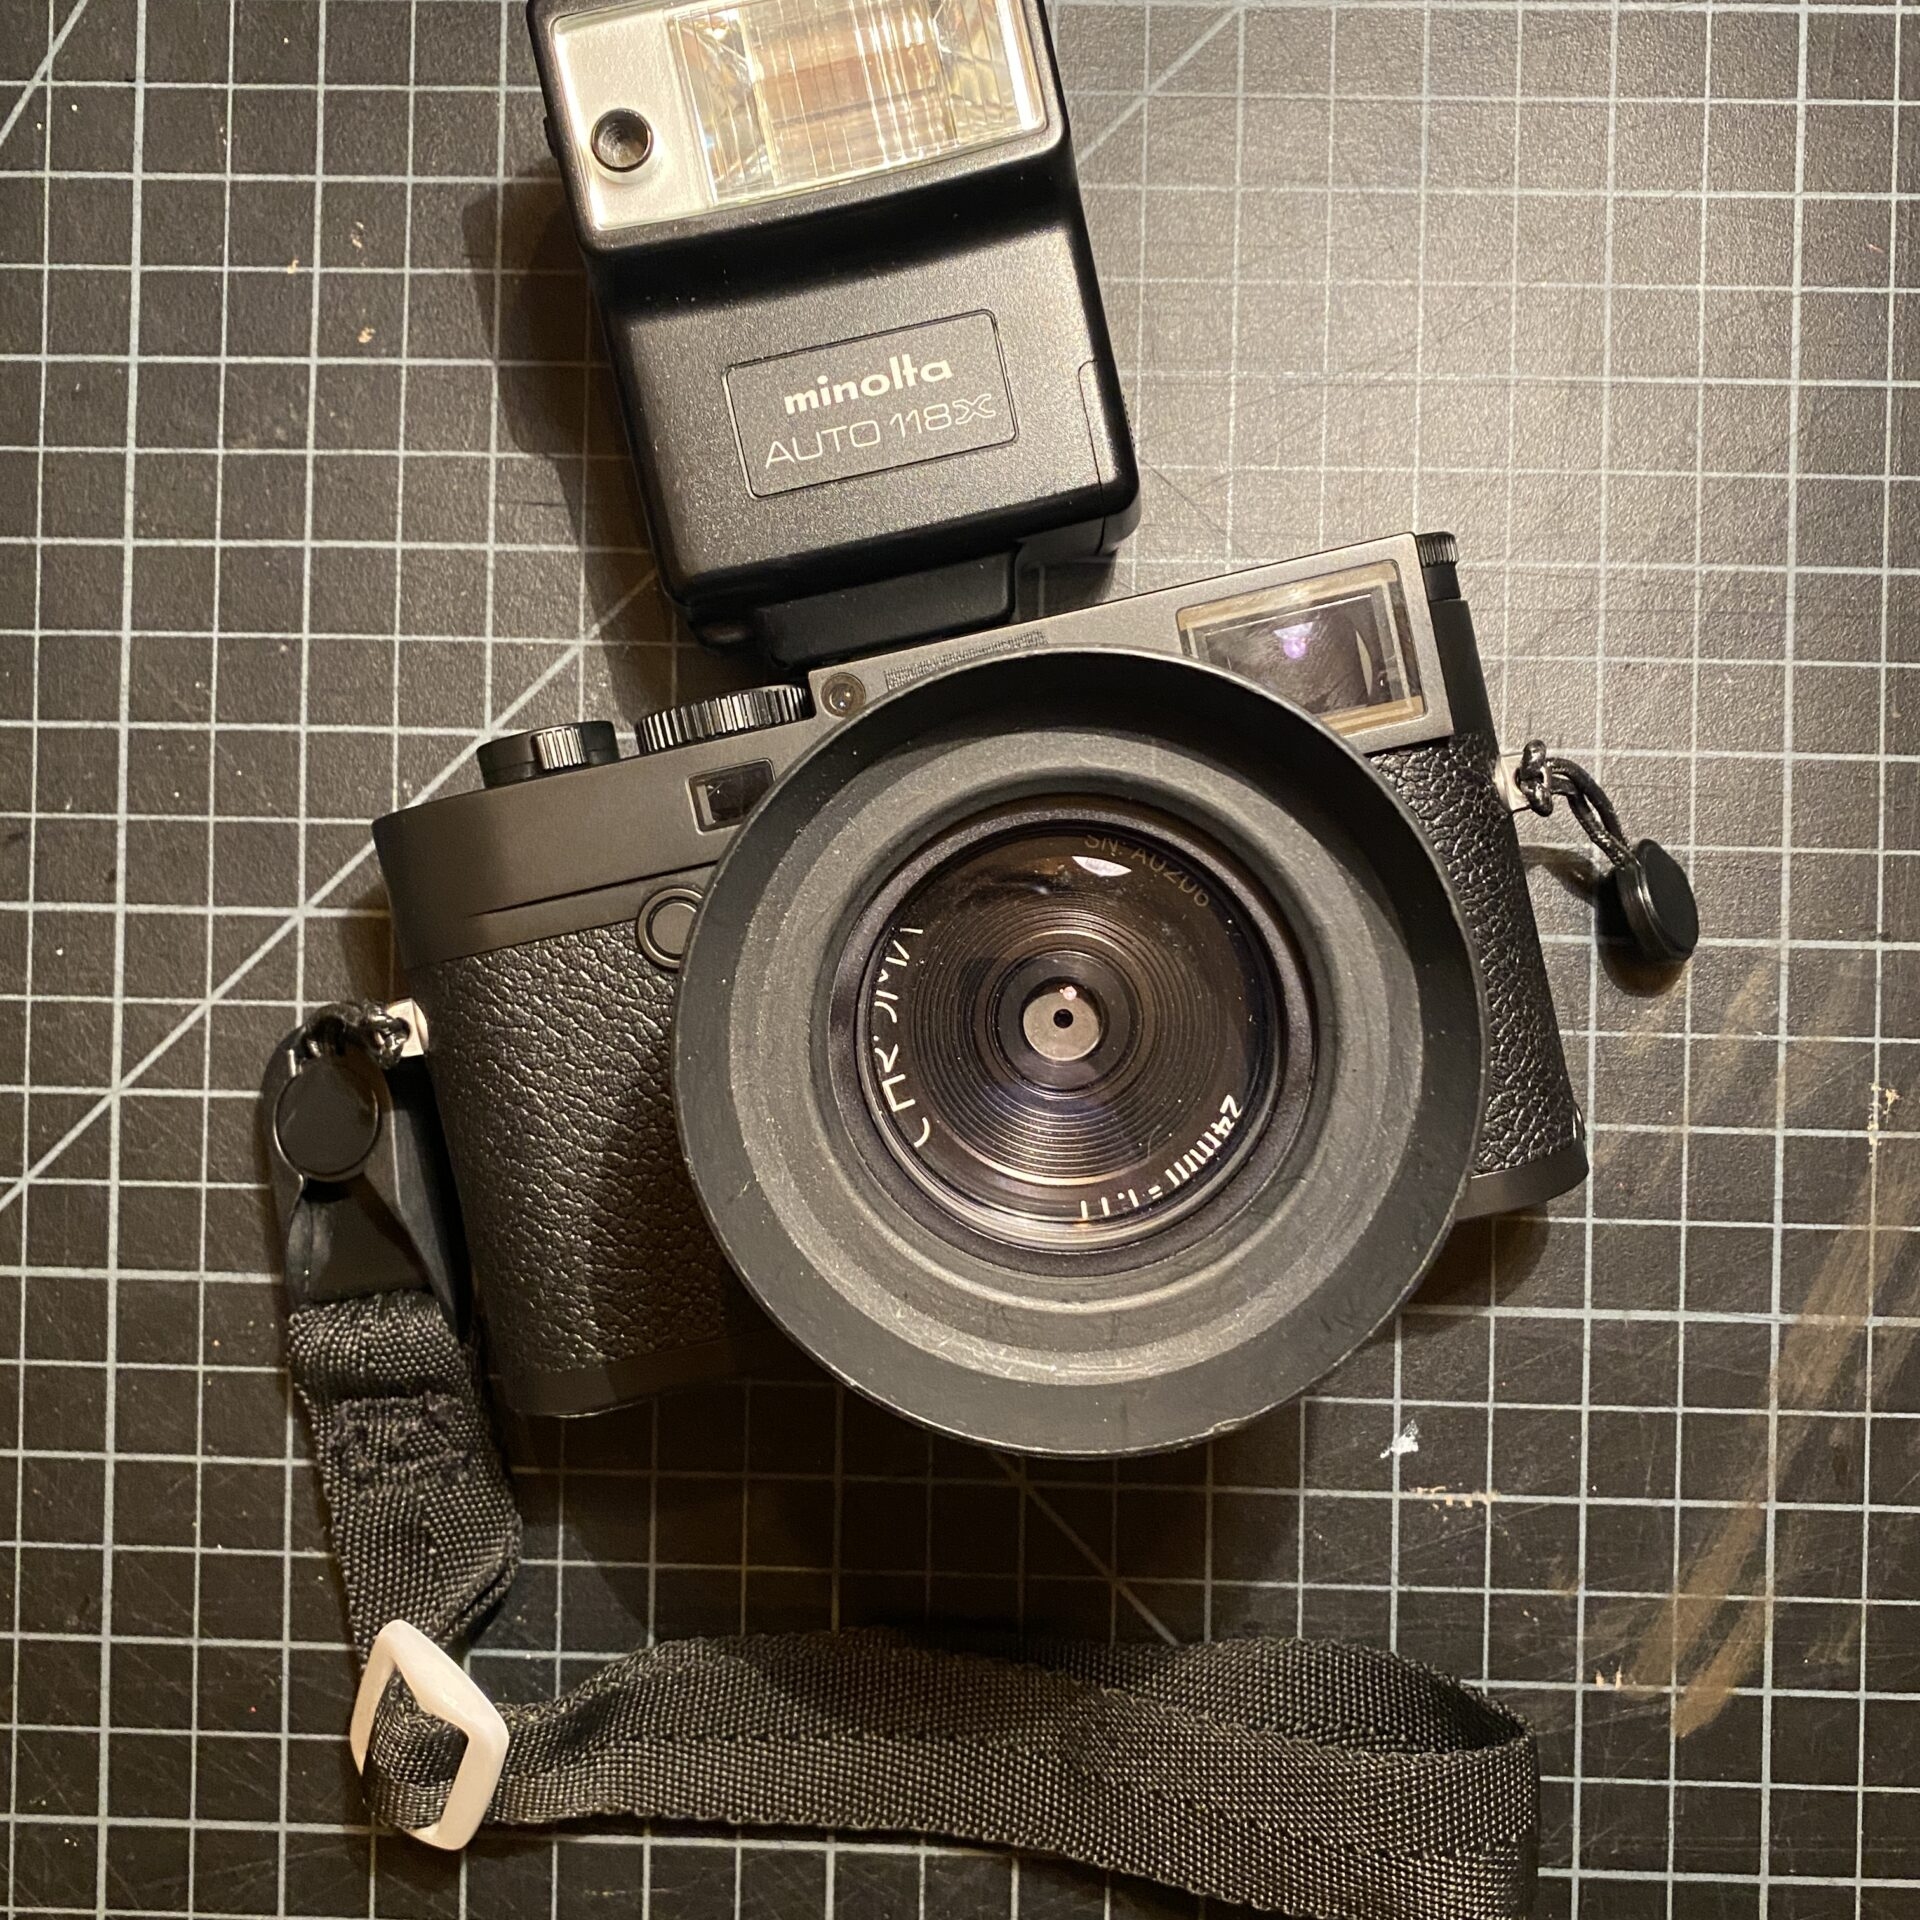 A photo of a Leica camera